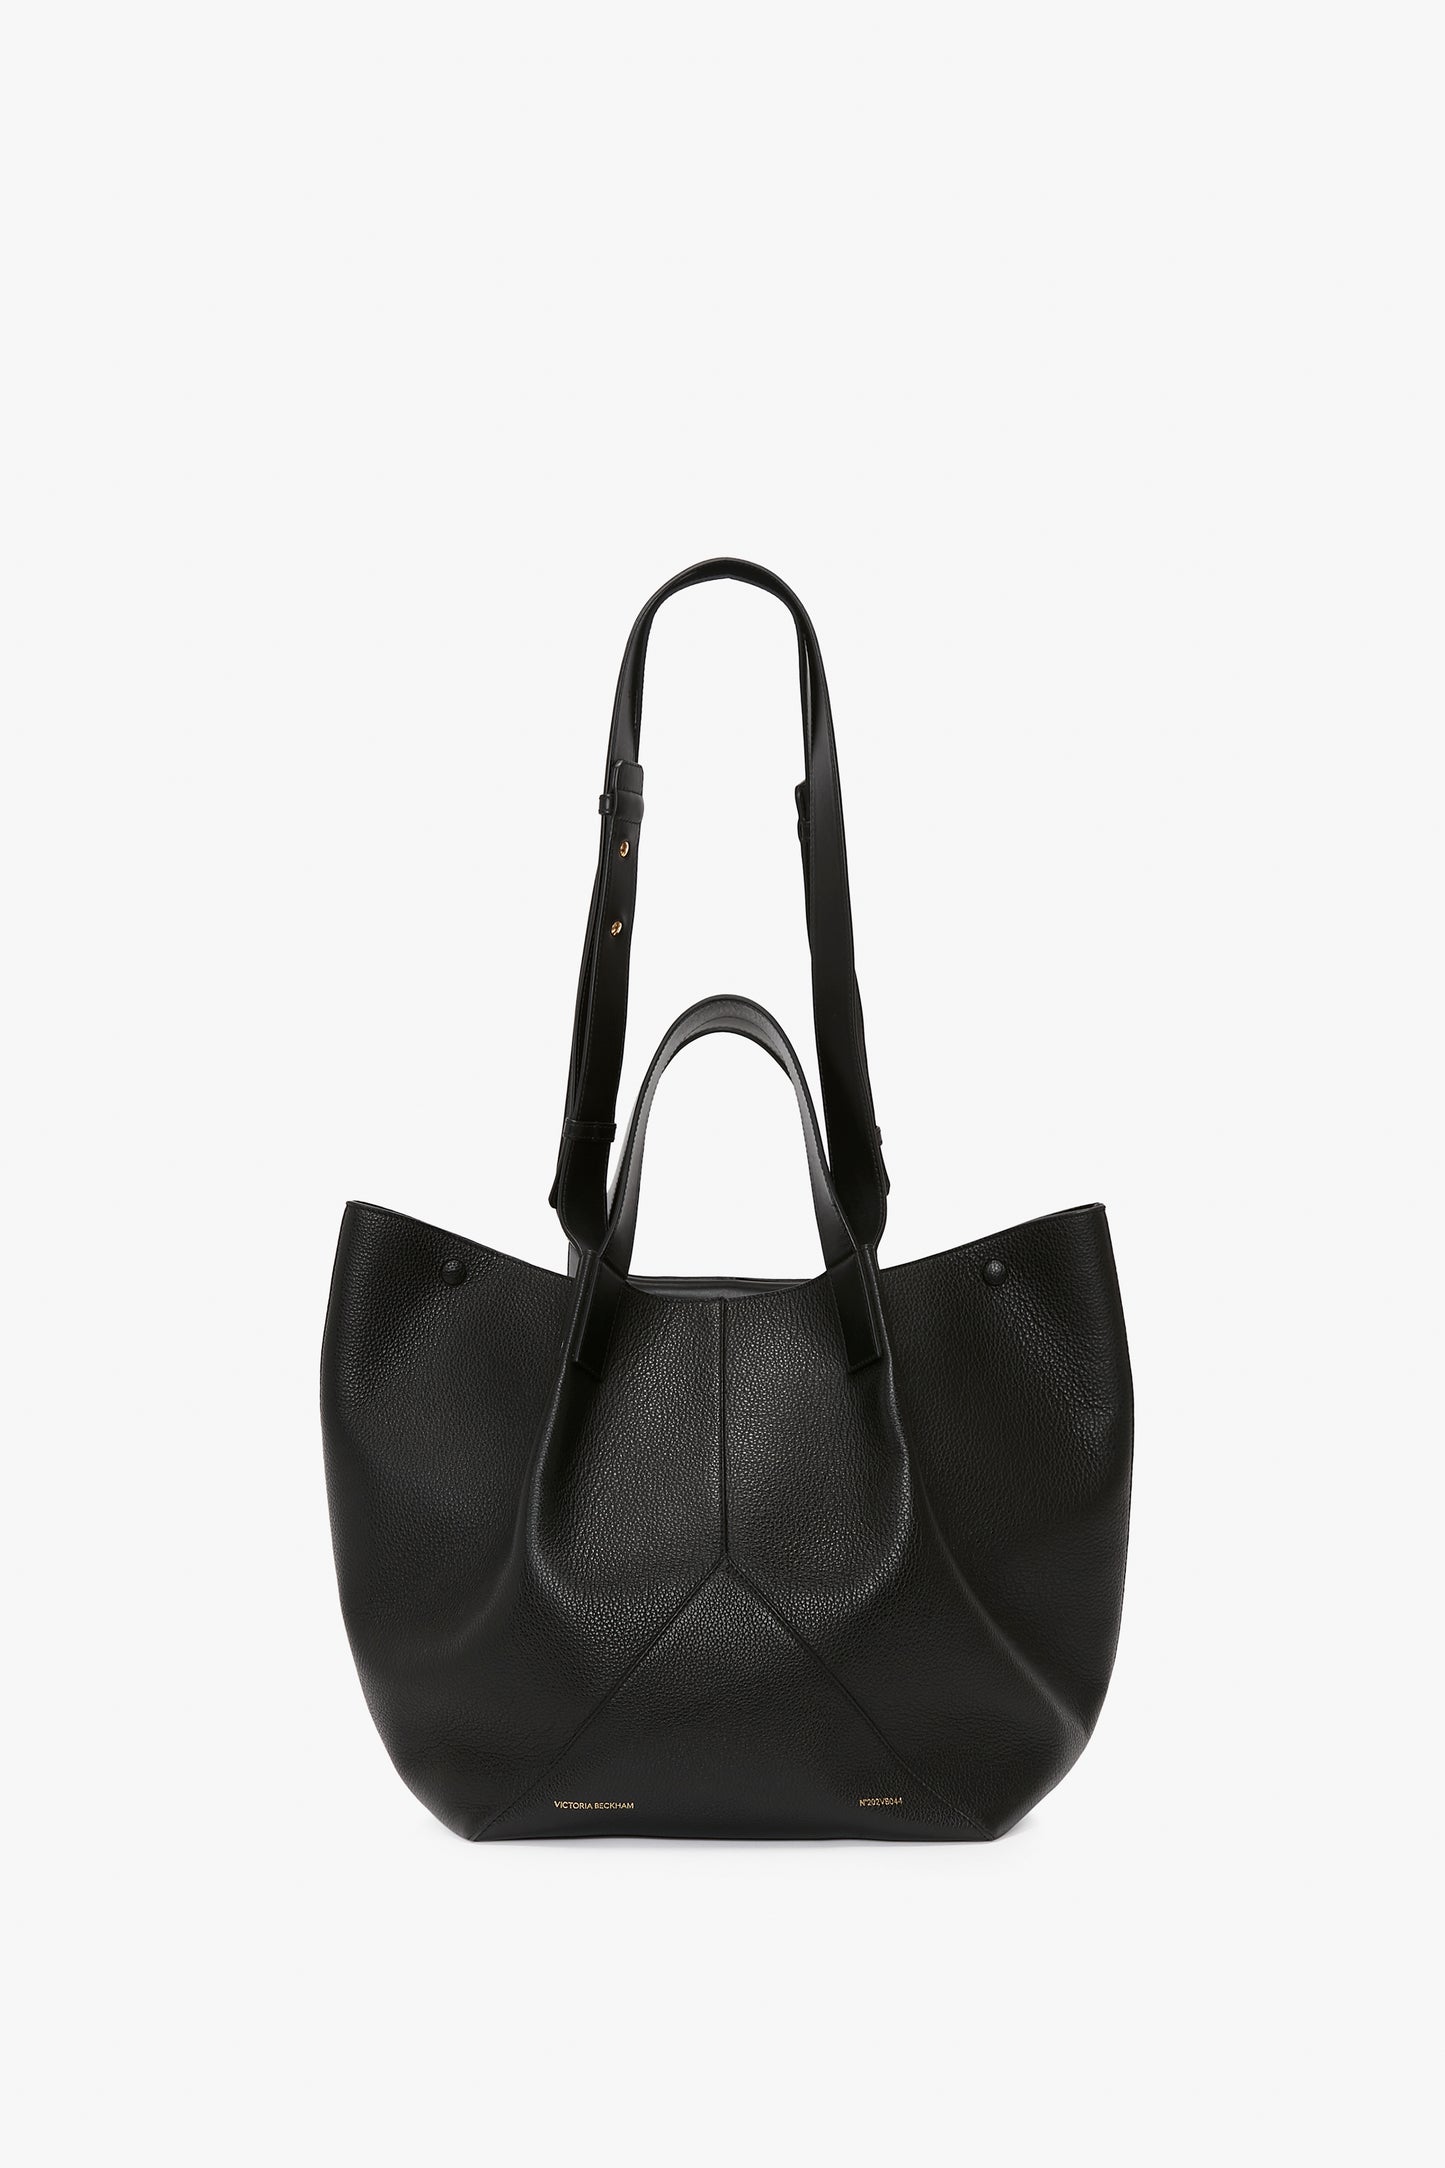 Victoria Secret Purse Handbag Black With Faux Cheetah Stripes & Gold  accents | eBay